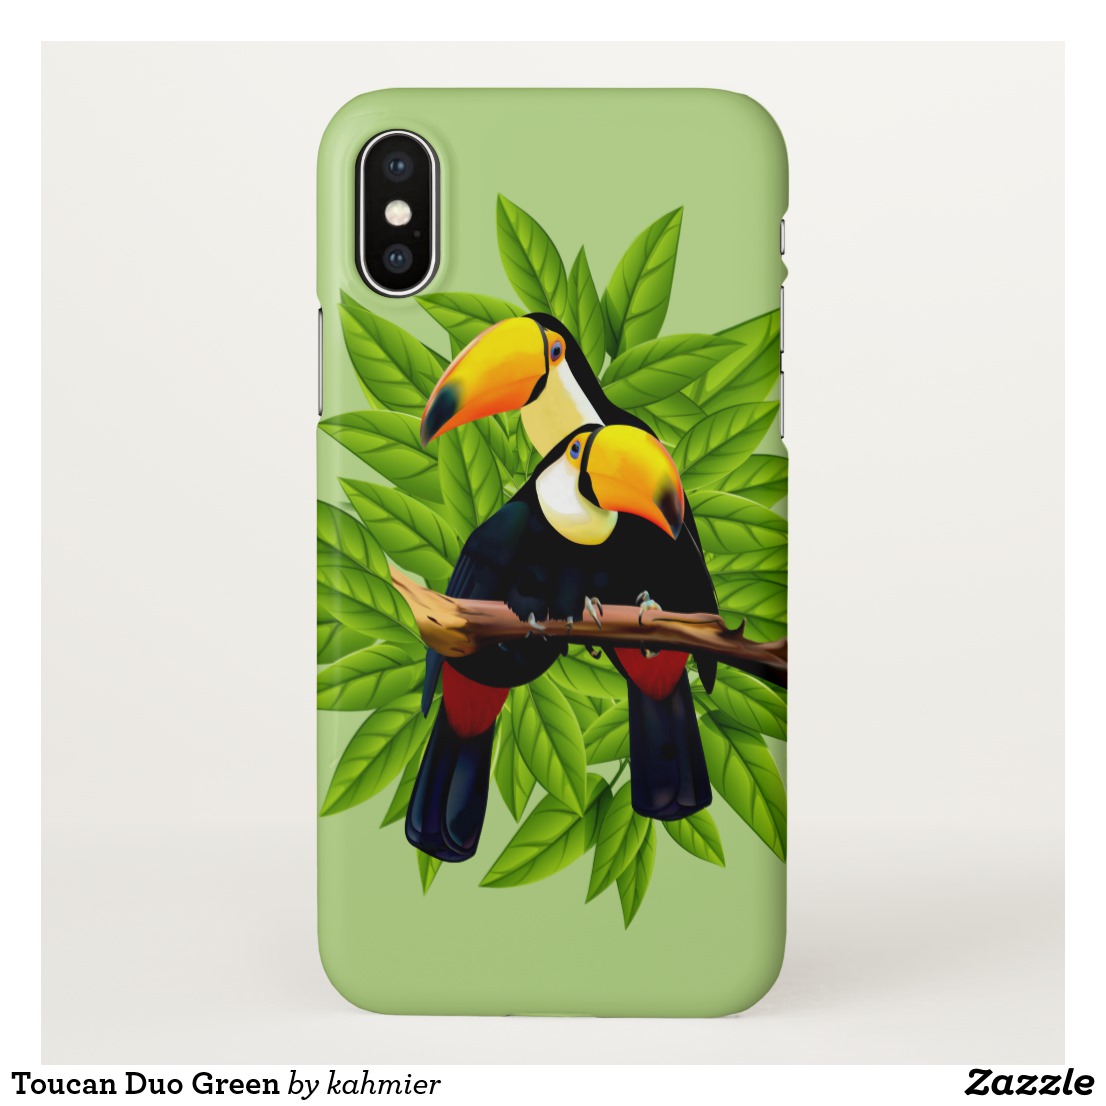 Toucan Duo Green iPhone Case